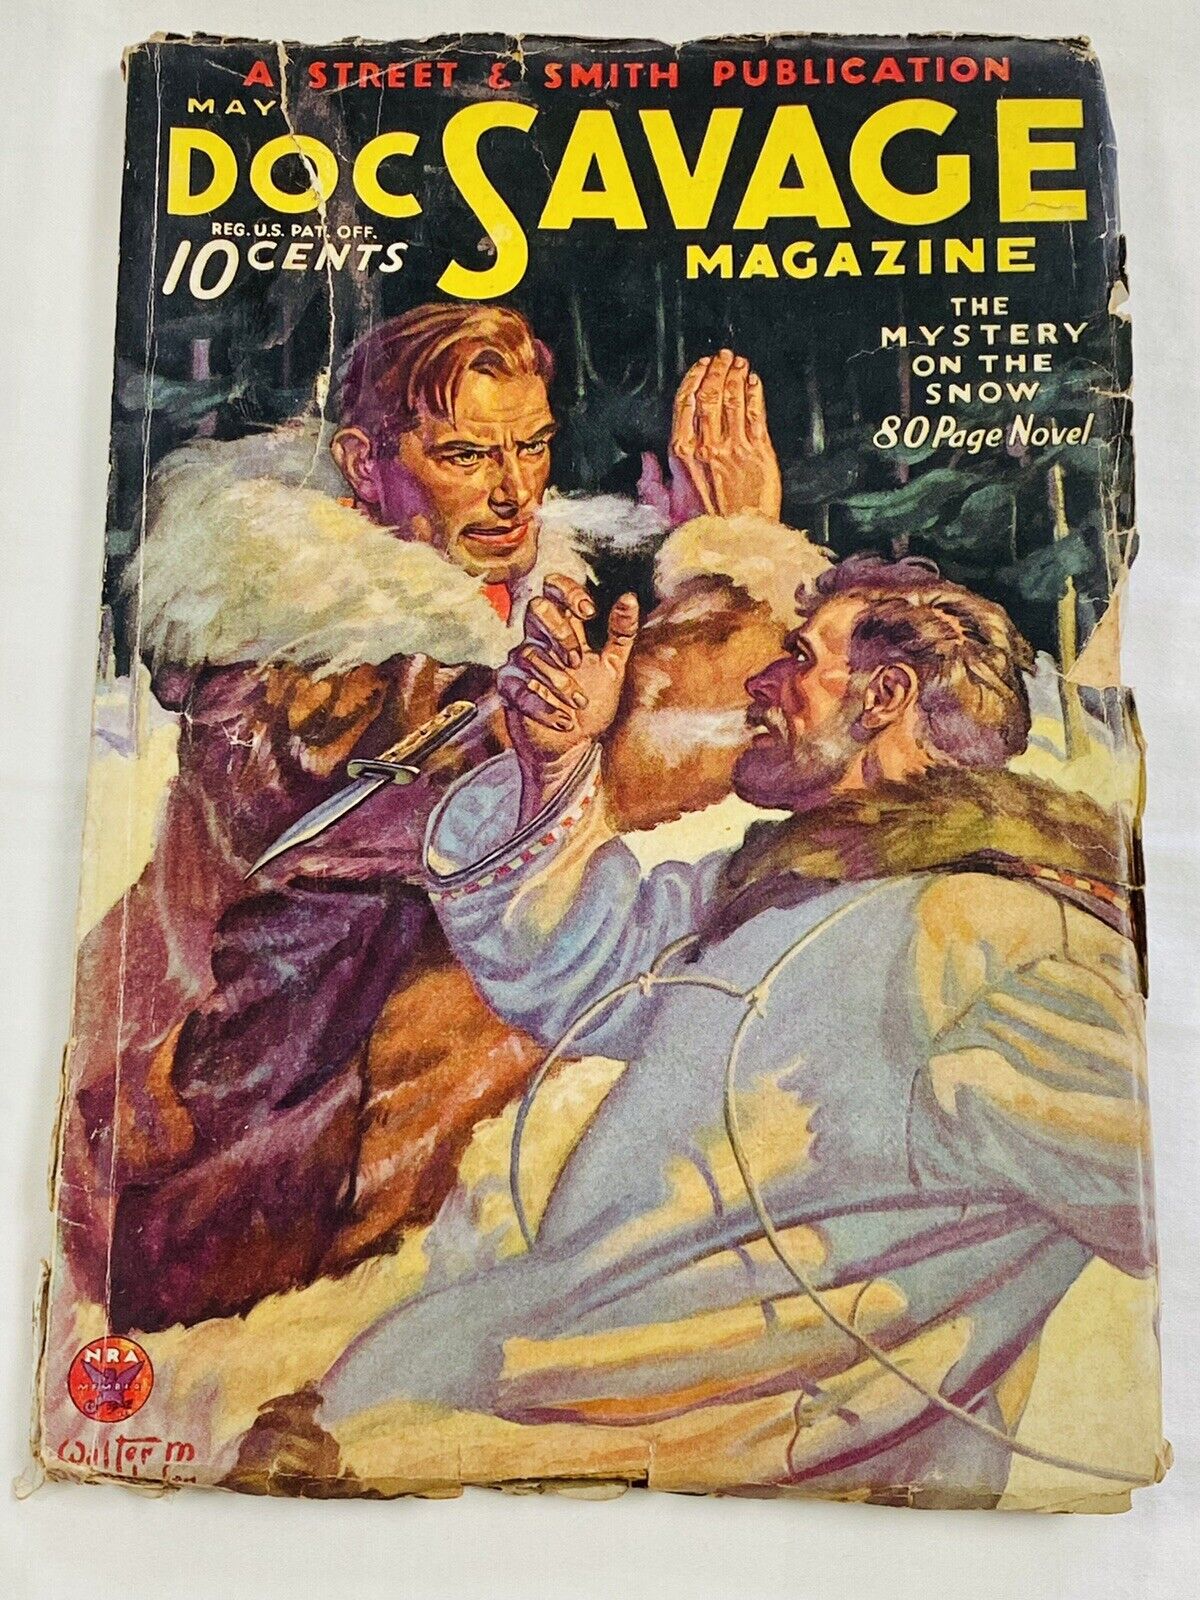 Original Doc Savage May 1934 Pulp Magazine “The Mystery On The Snow” Volume 3 #3